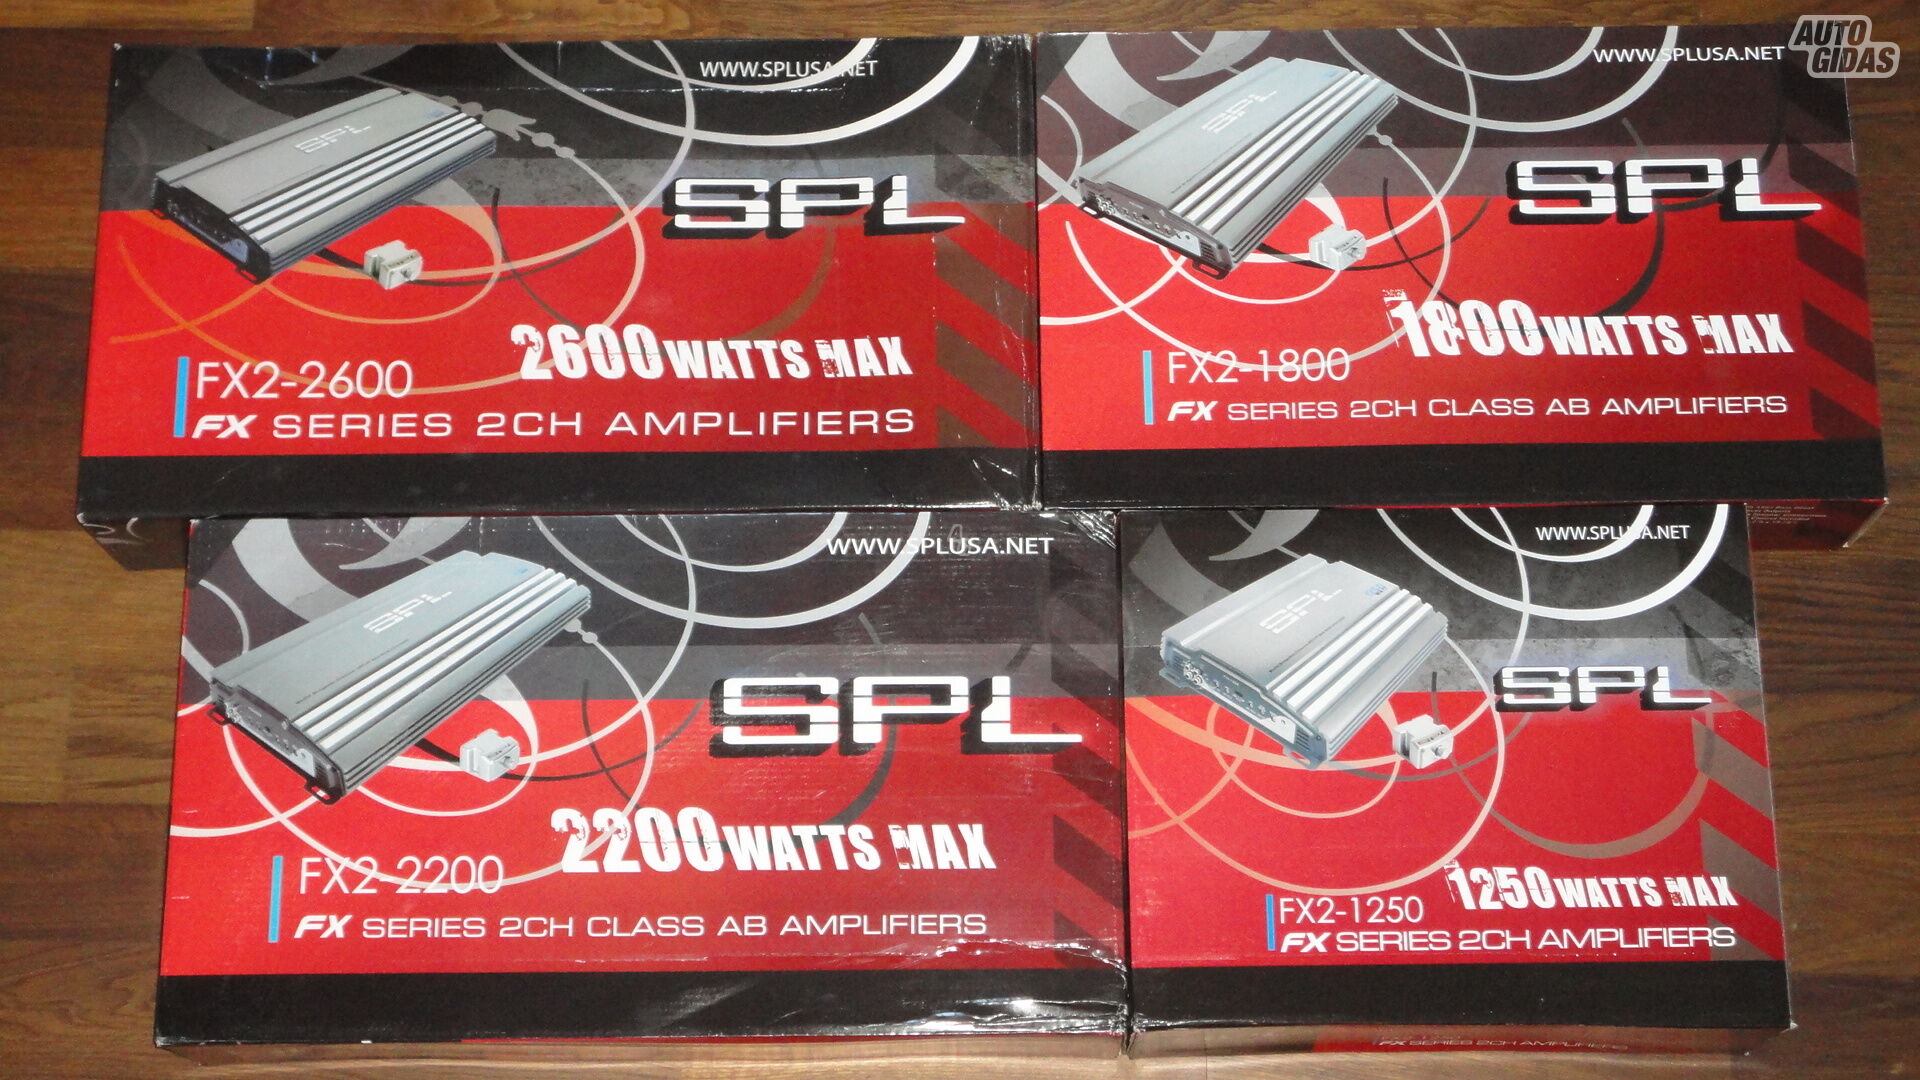 SPL dynamics SPL FX2-1250 Audio Amplifier